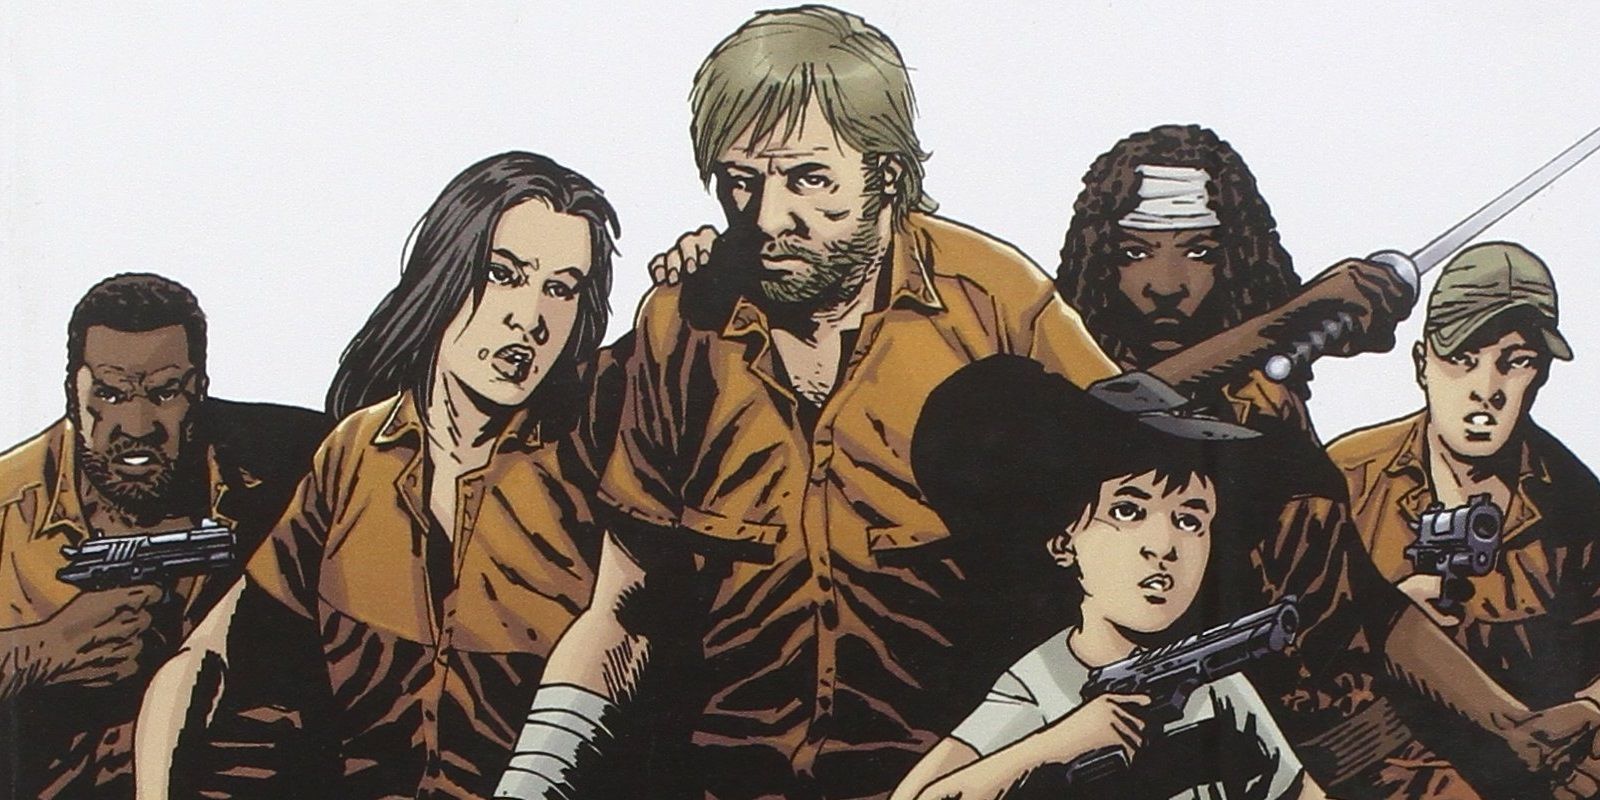 Robert Kirkman sees potential in animated Walking Dead series